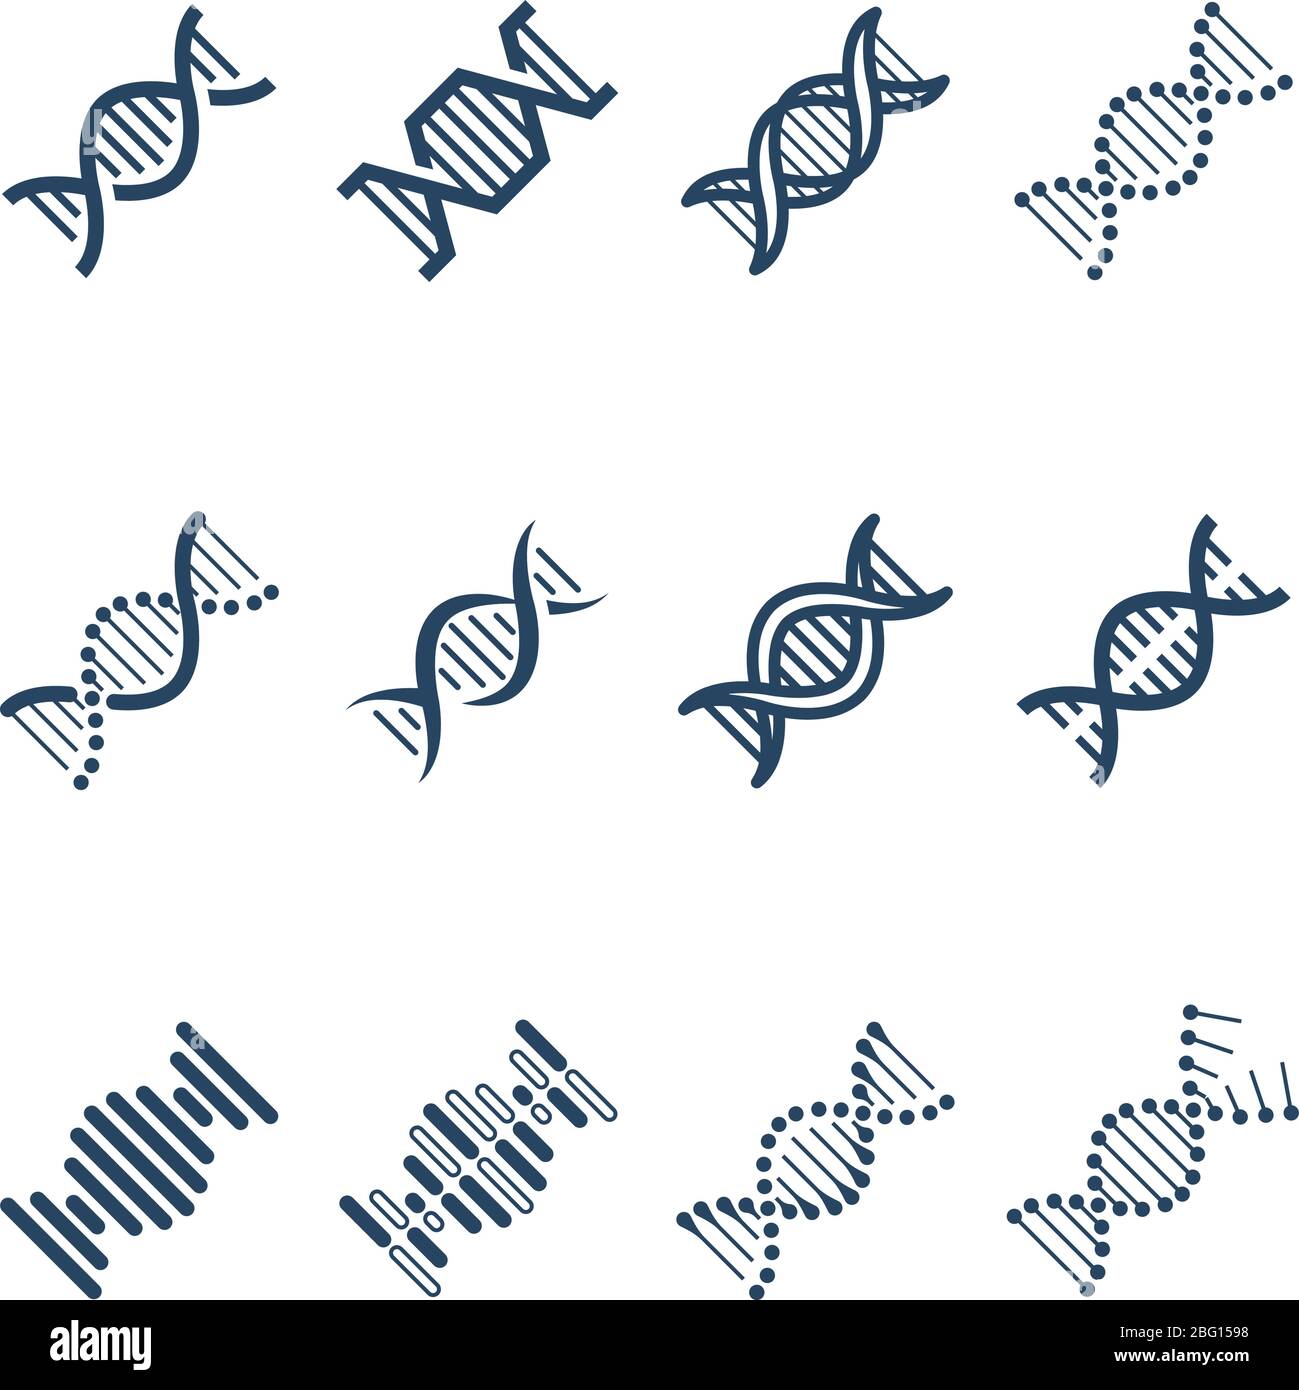 DNA-Spiralmolekül Struktur Vektor-Symbole. Genetik Forschung und Chromosom Engineering Symbole. Struktur Chromosom dna und genetische Molekül Illustration Stock Vektor